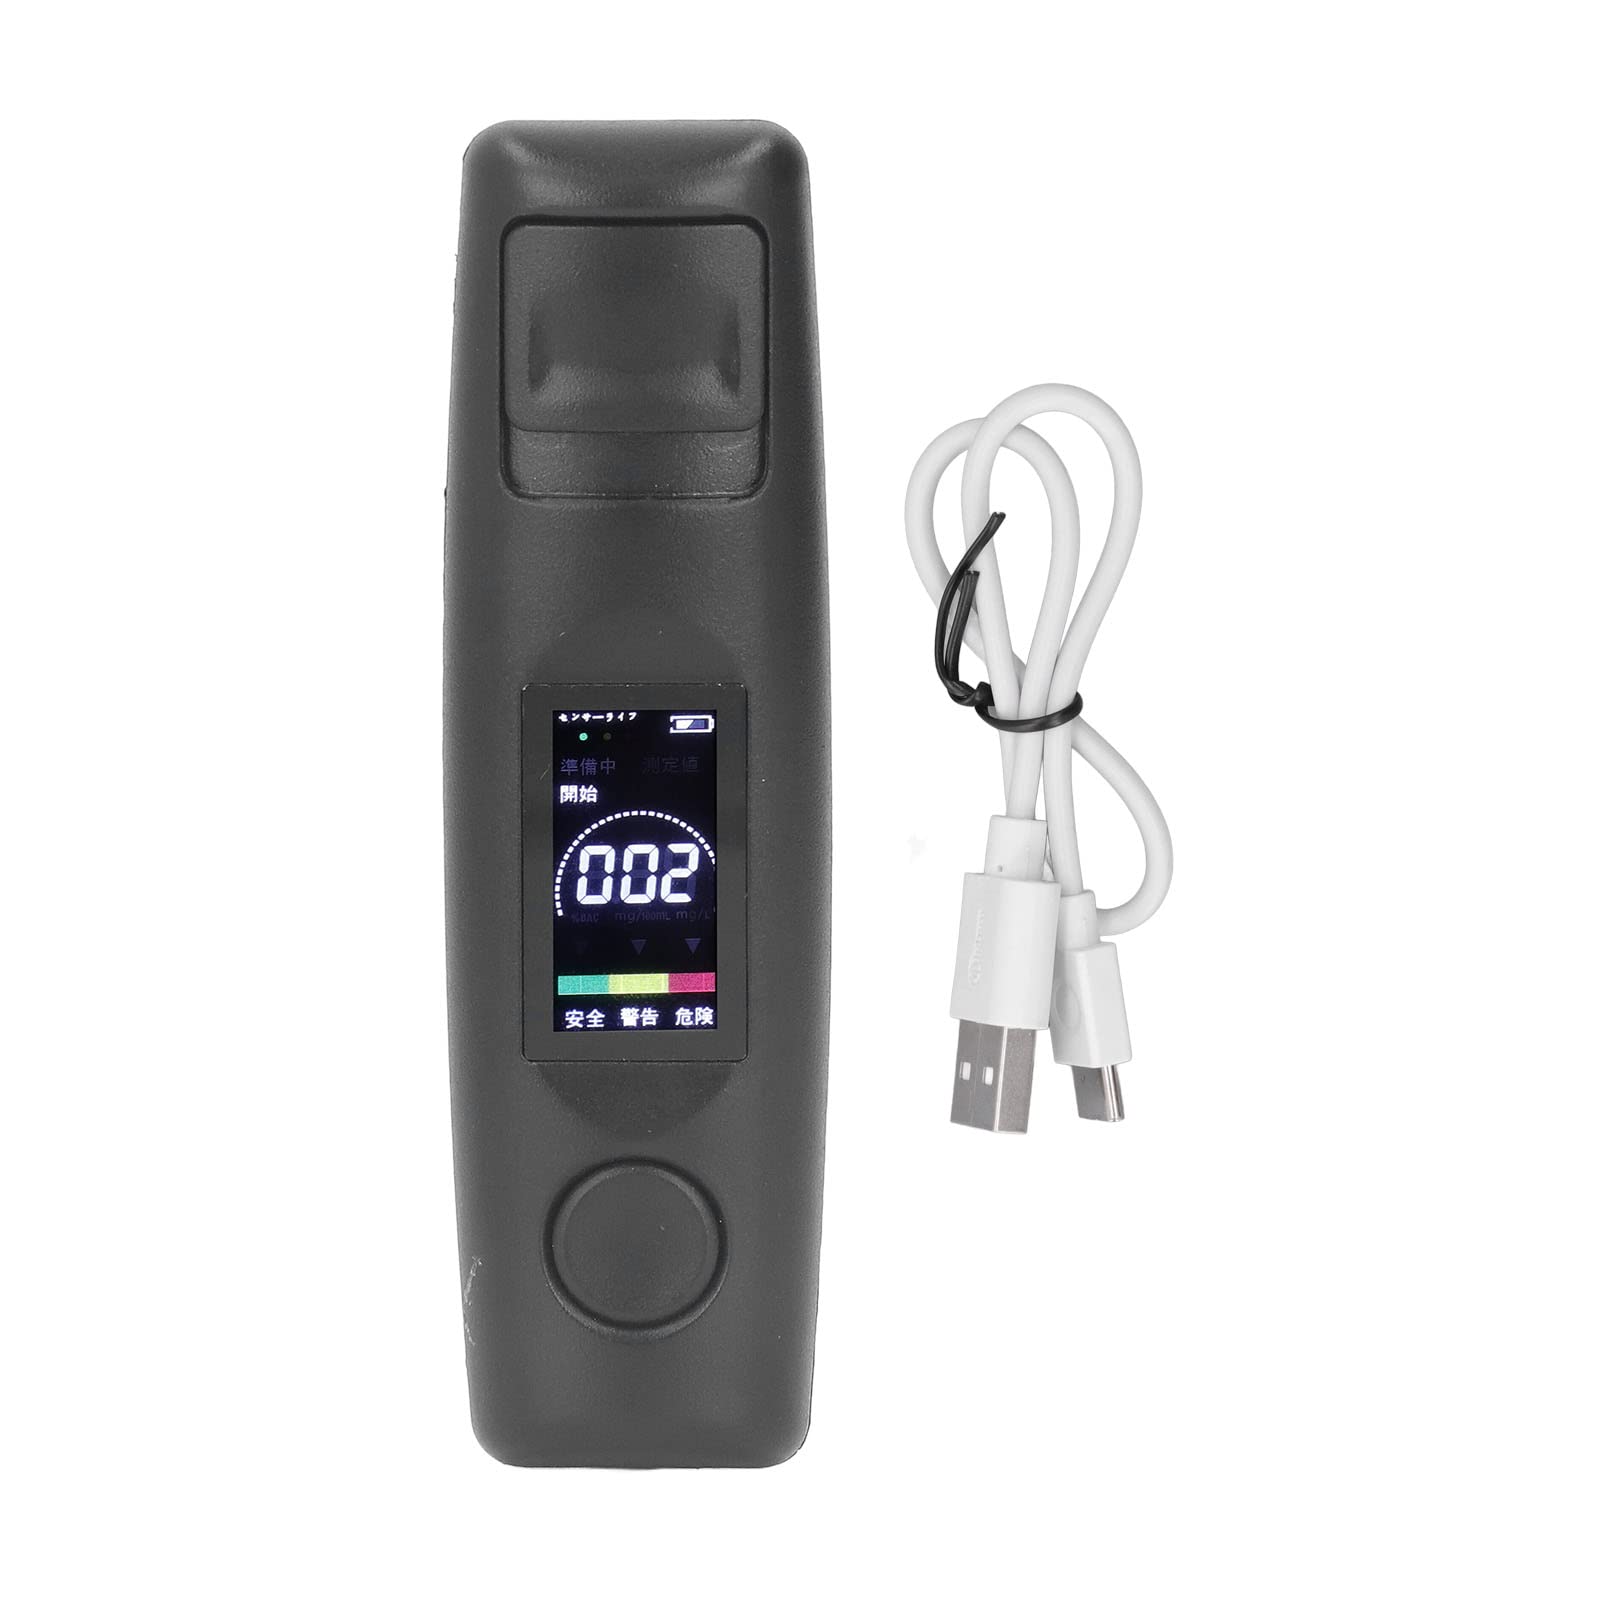 High Accuracy Mini Portable Alcohol Tester Digital Display